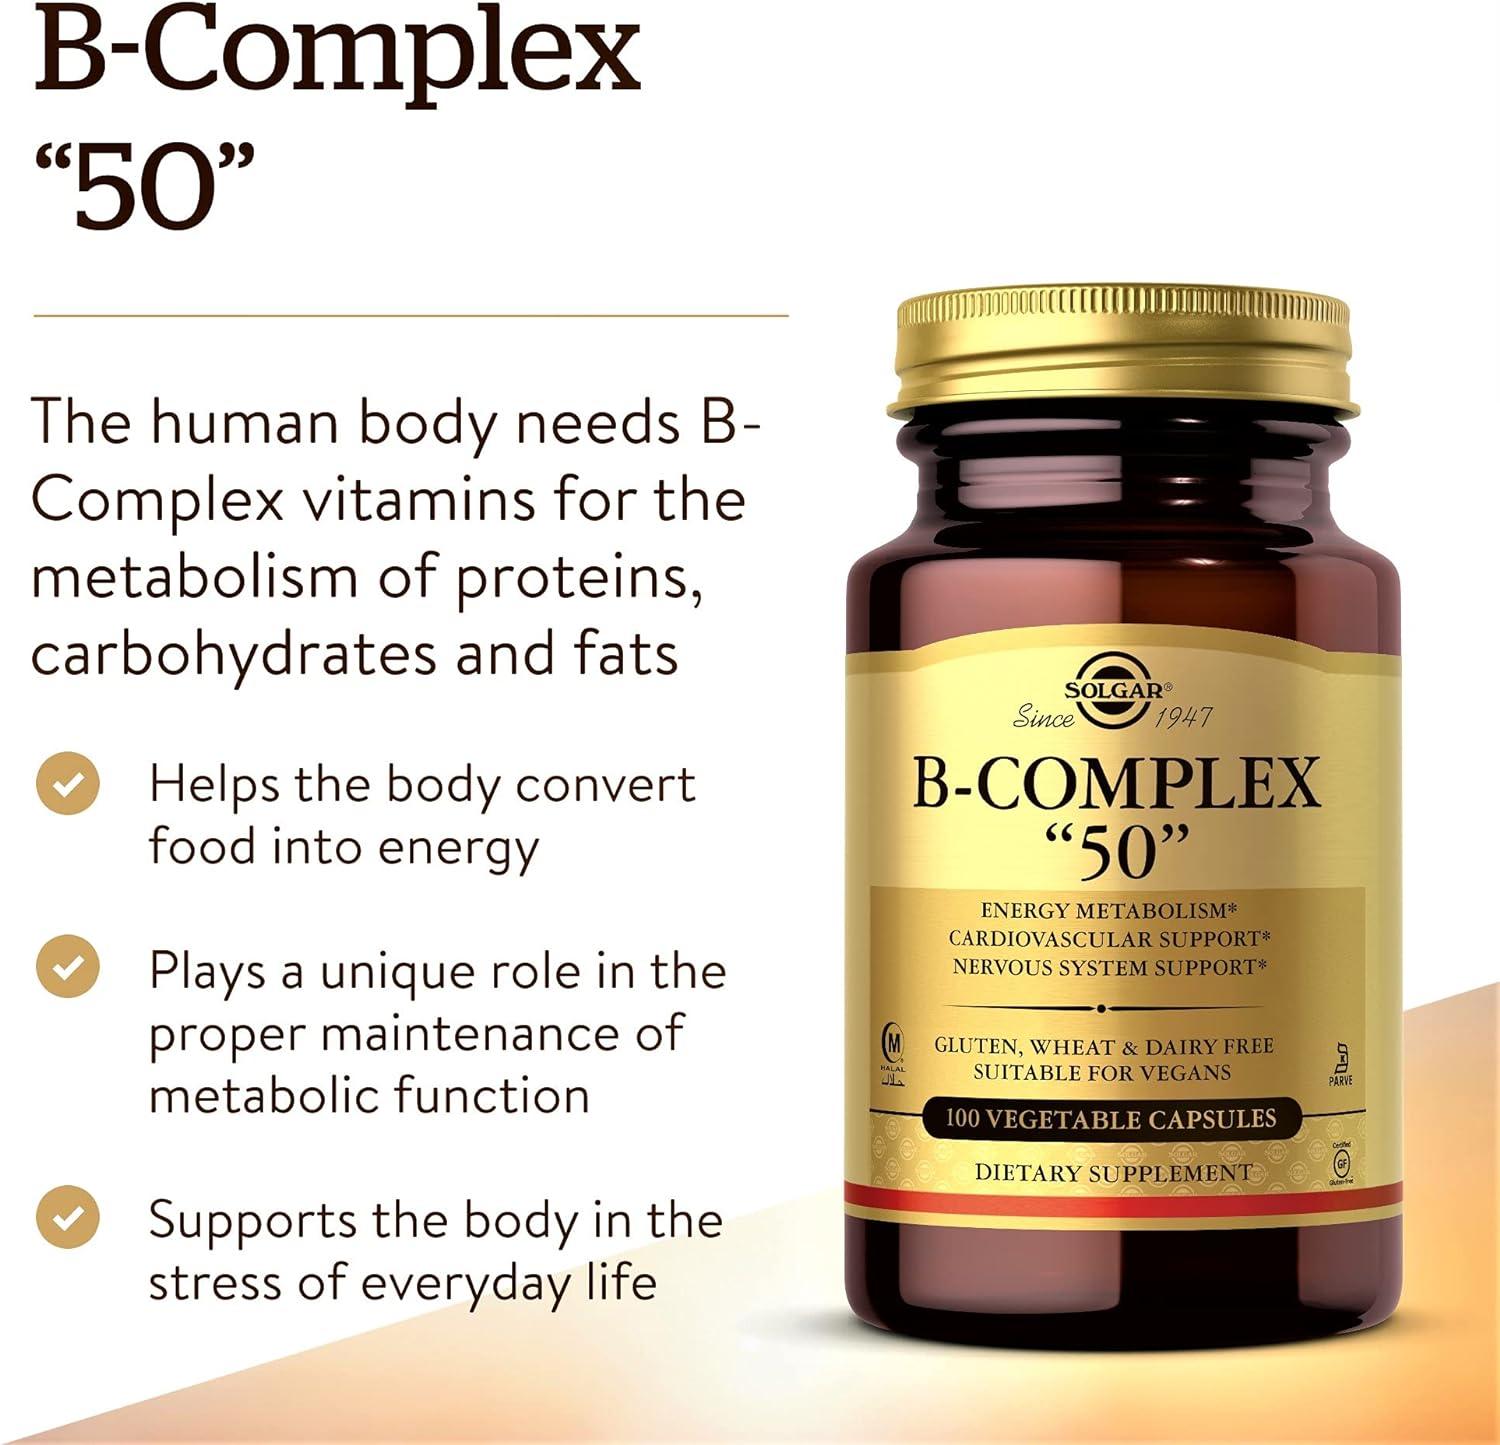 Solgar B-Complex "50" Vegetable Capsules 100'S - Wellness Shoppee